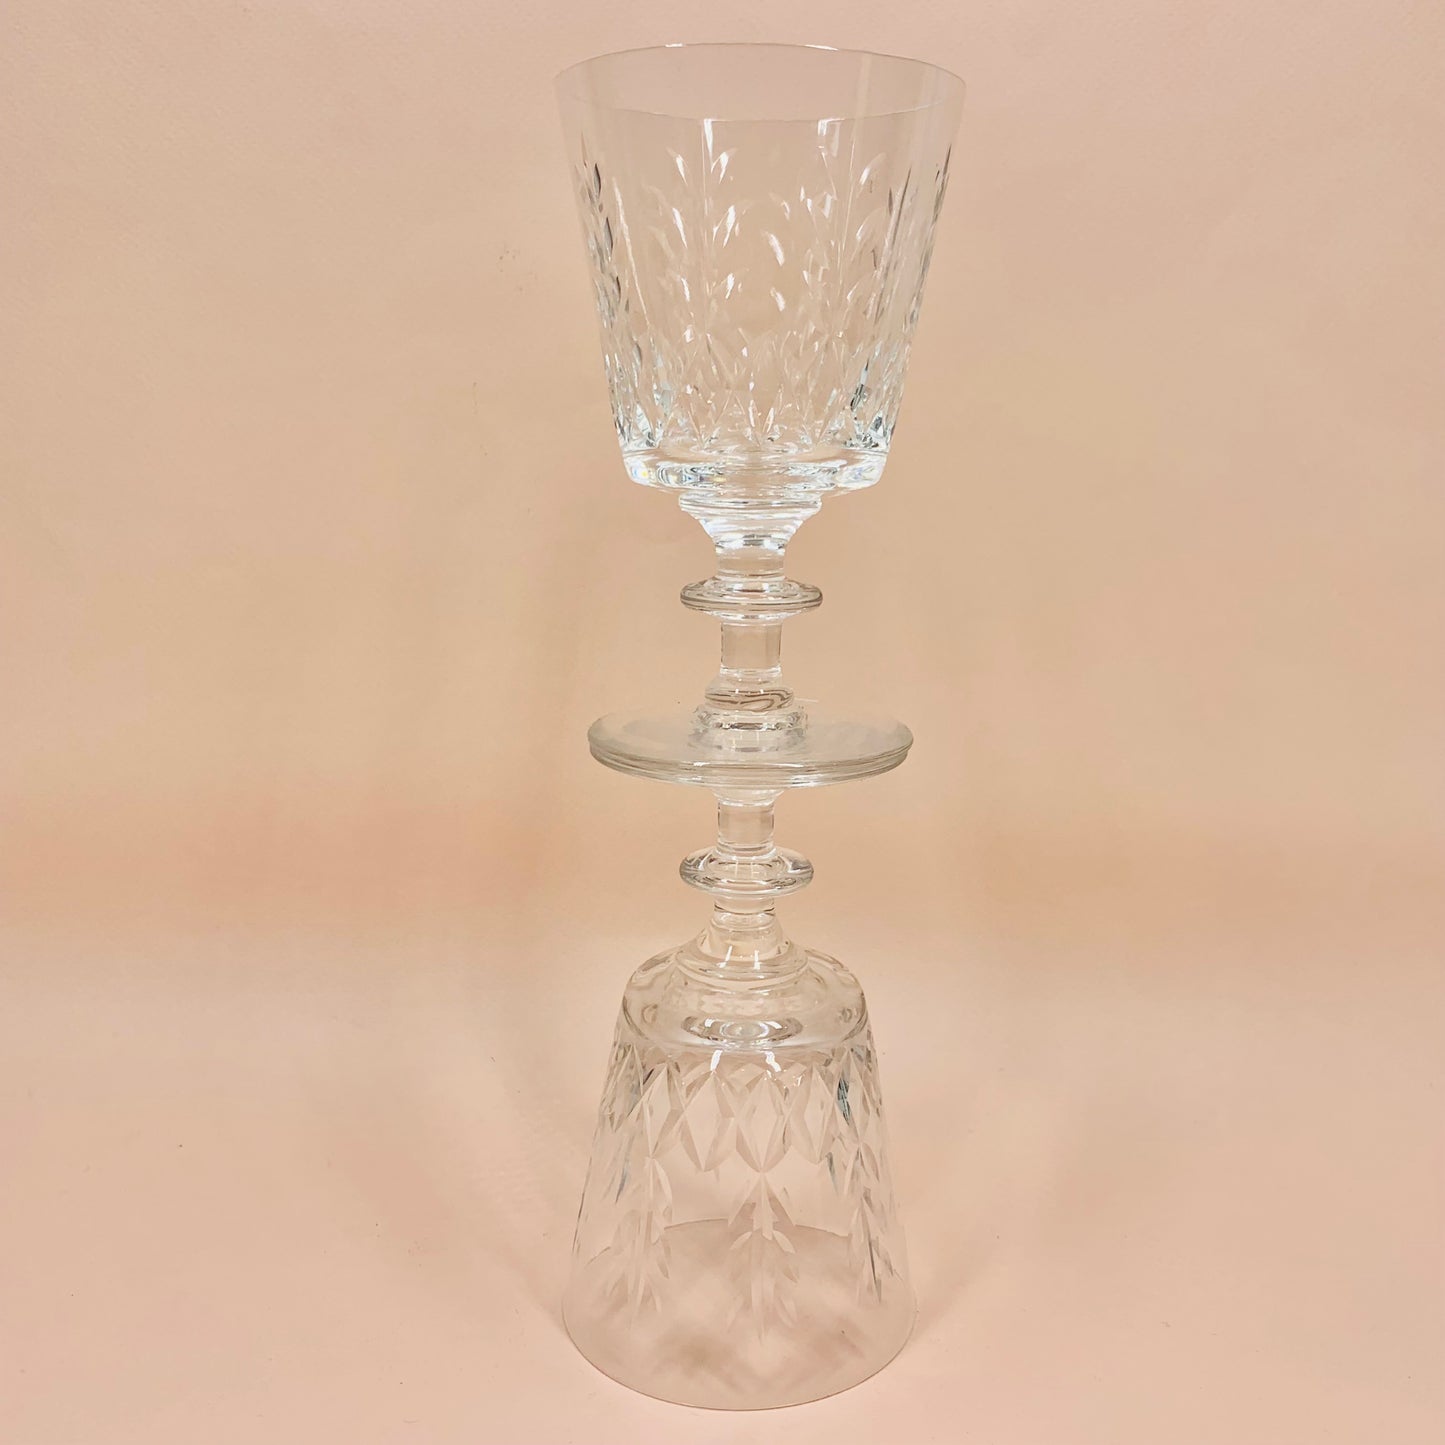 Antique Webb English short stem hand etched crystal wine glasses